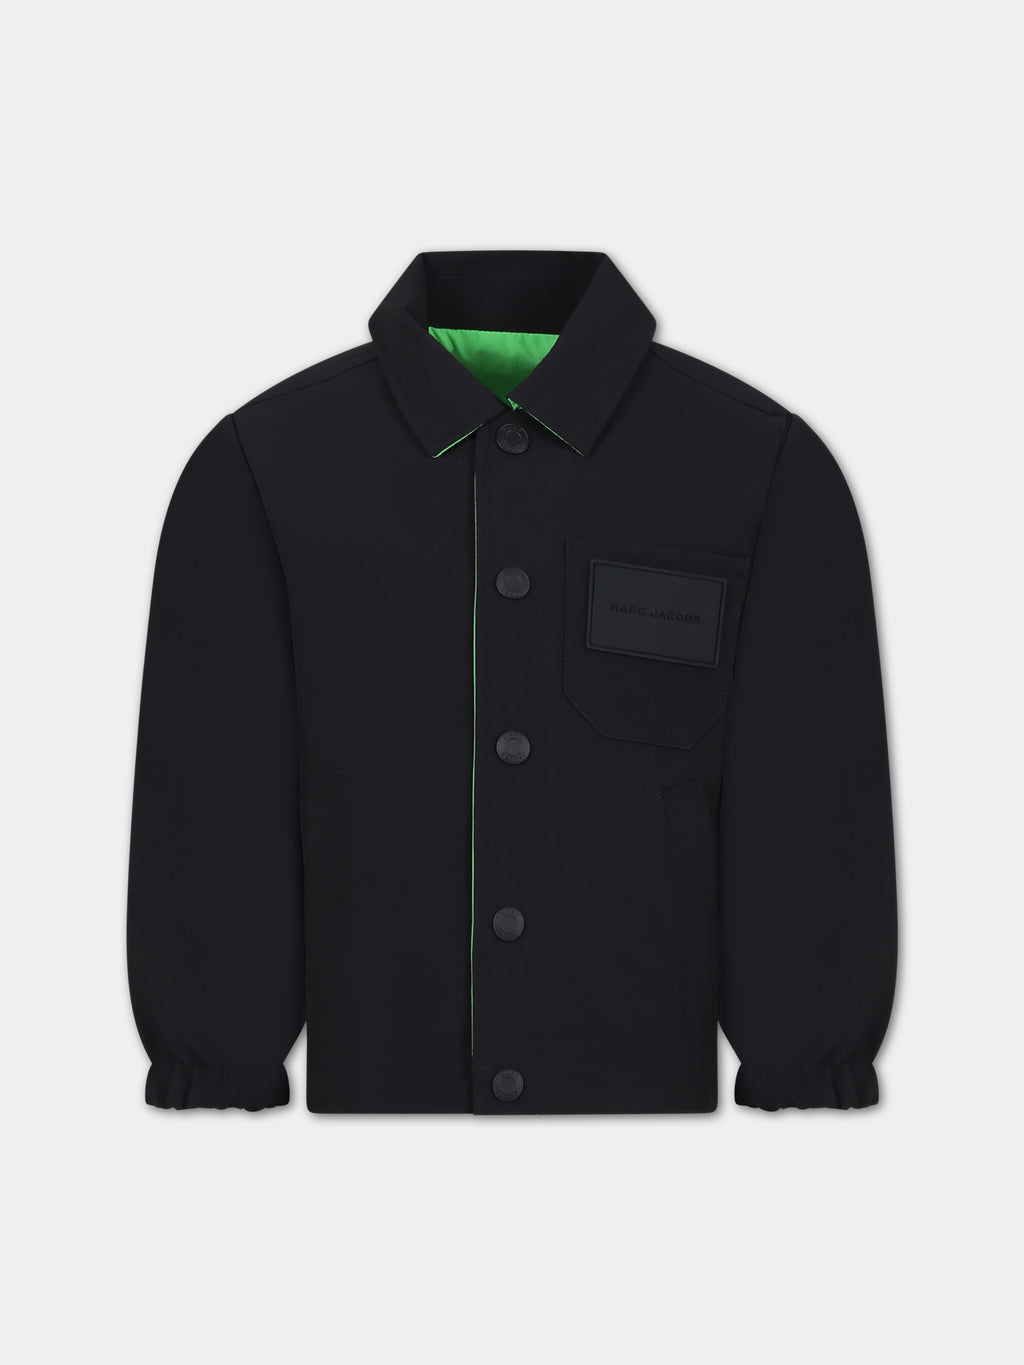 Black jacket for kids with logo